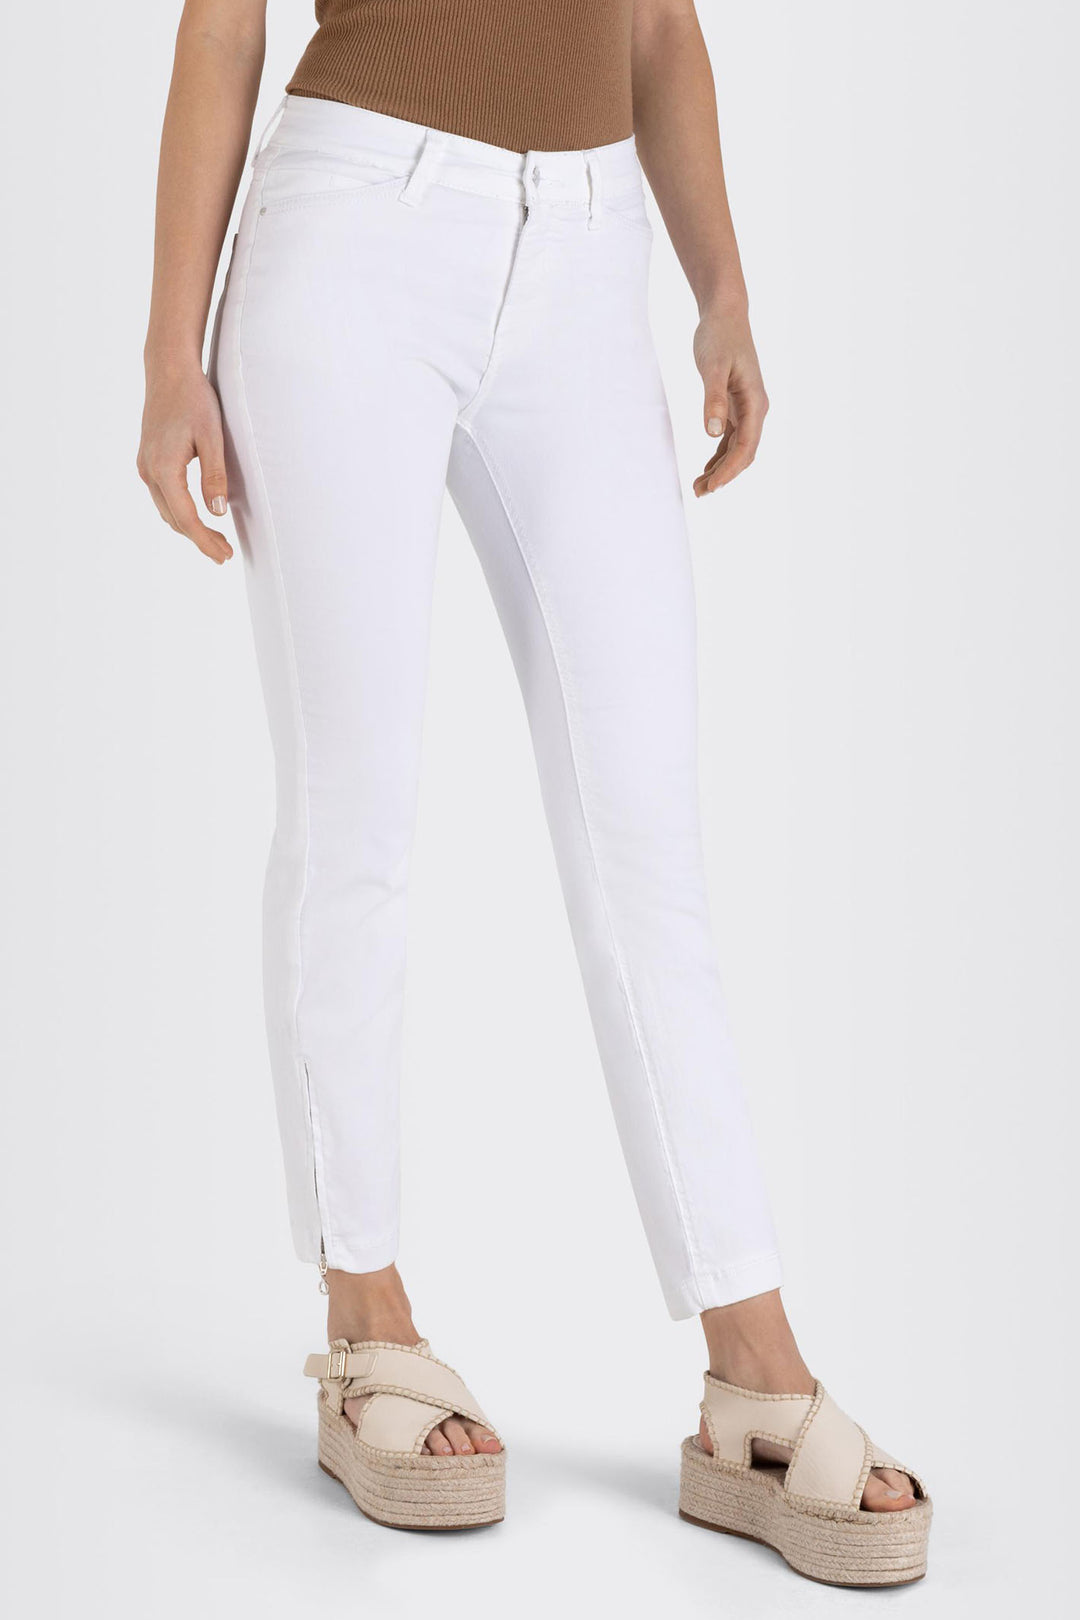 Mac 5471-90-0355L D010 Dream Chic White Ankle Length Jeans - Olivia Grace Fashion